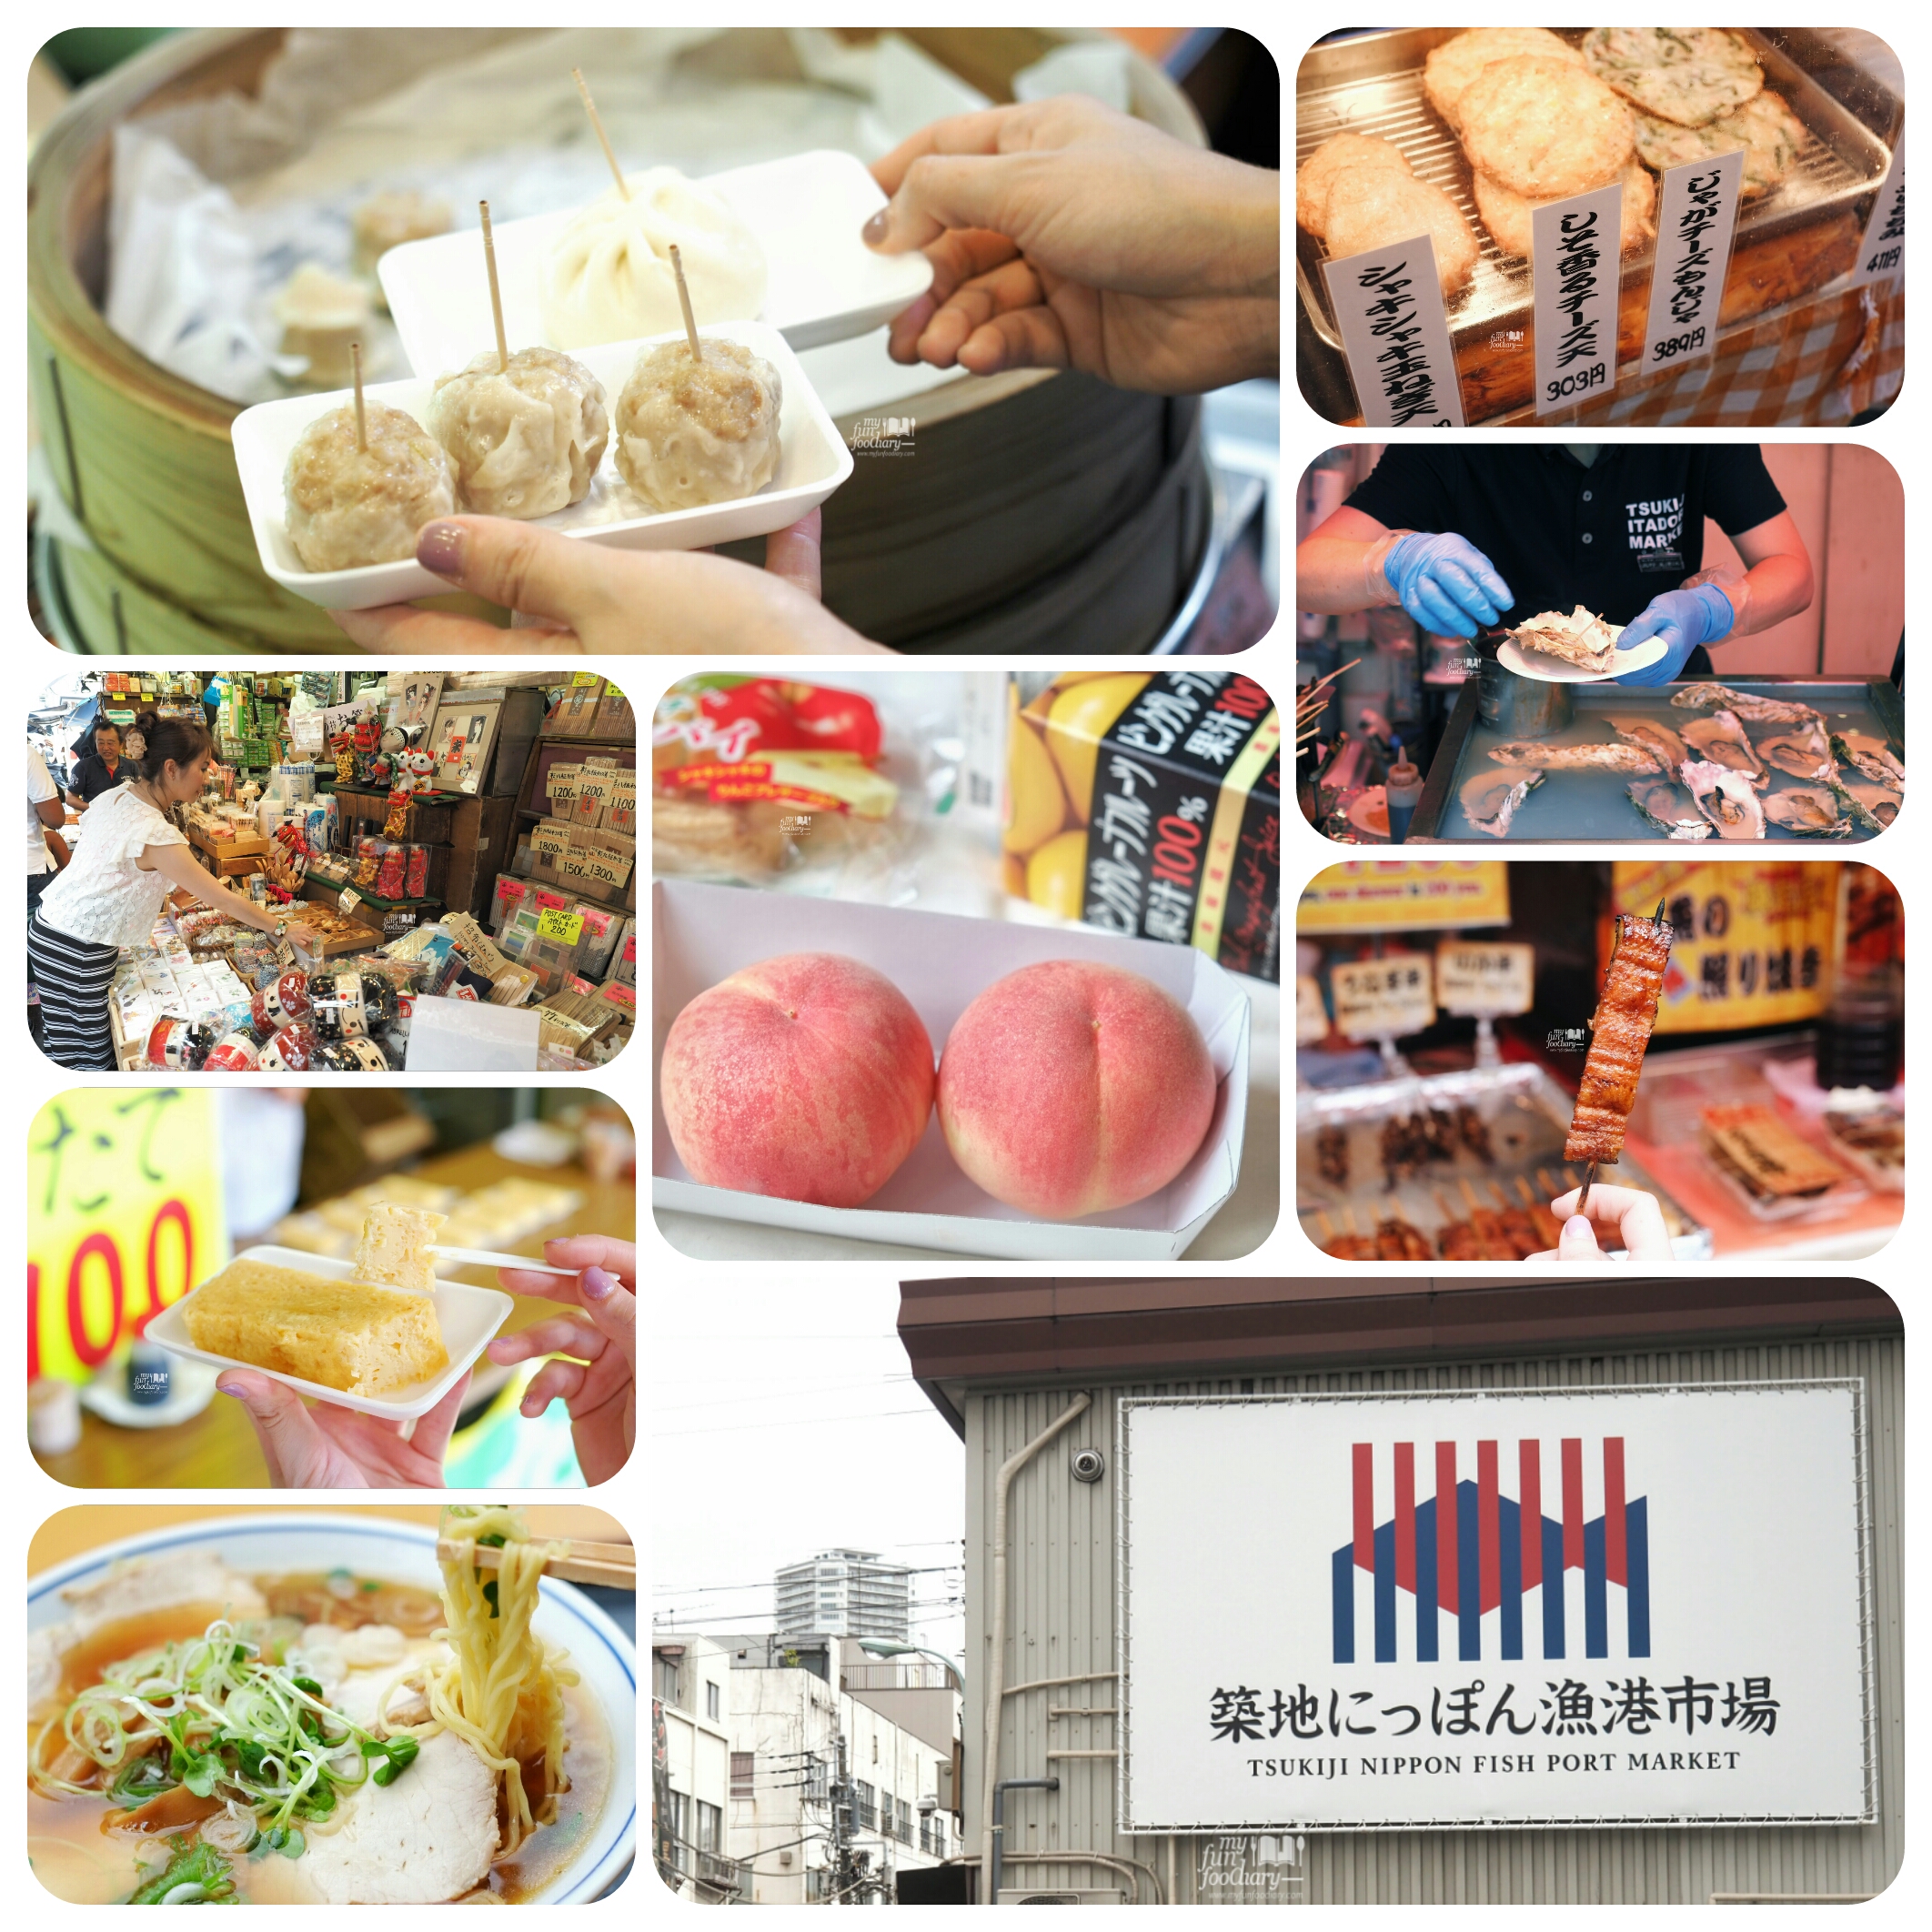 Tsukiji Fish Market Outer Market - 7 Snacks You Should Try in Tsukiji by Myfunfoodiary